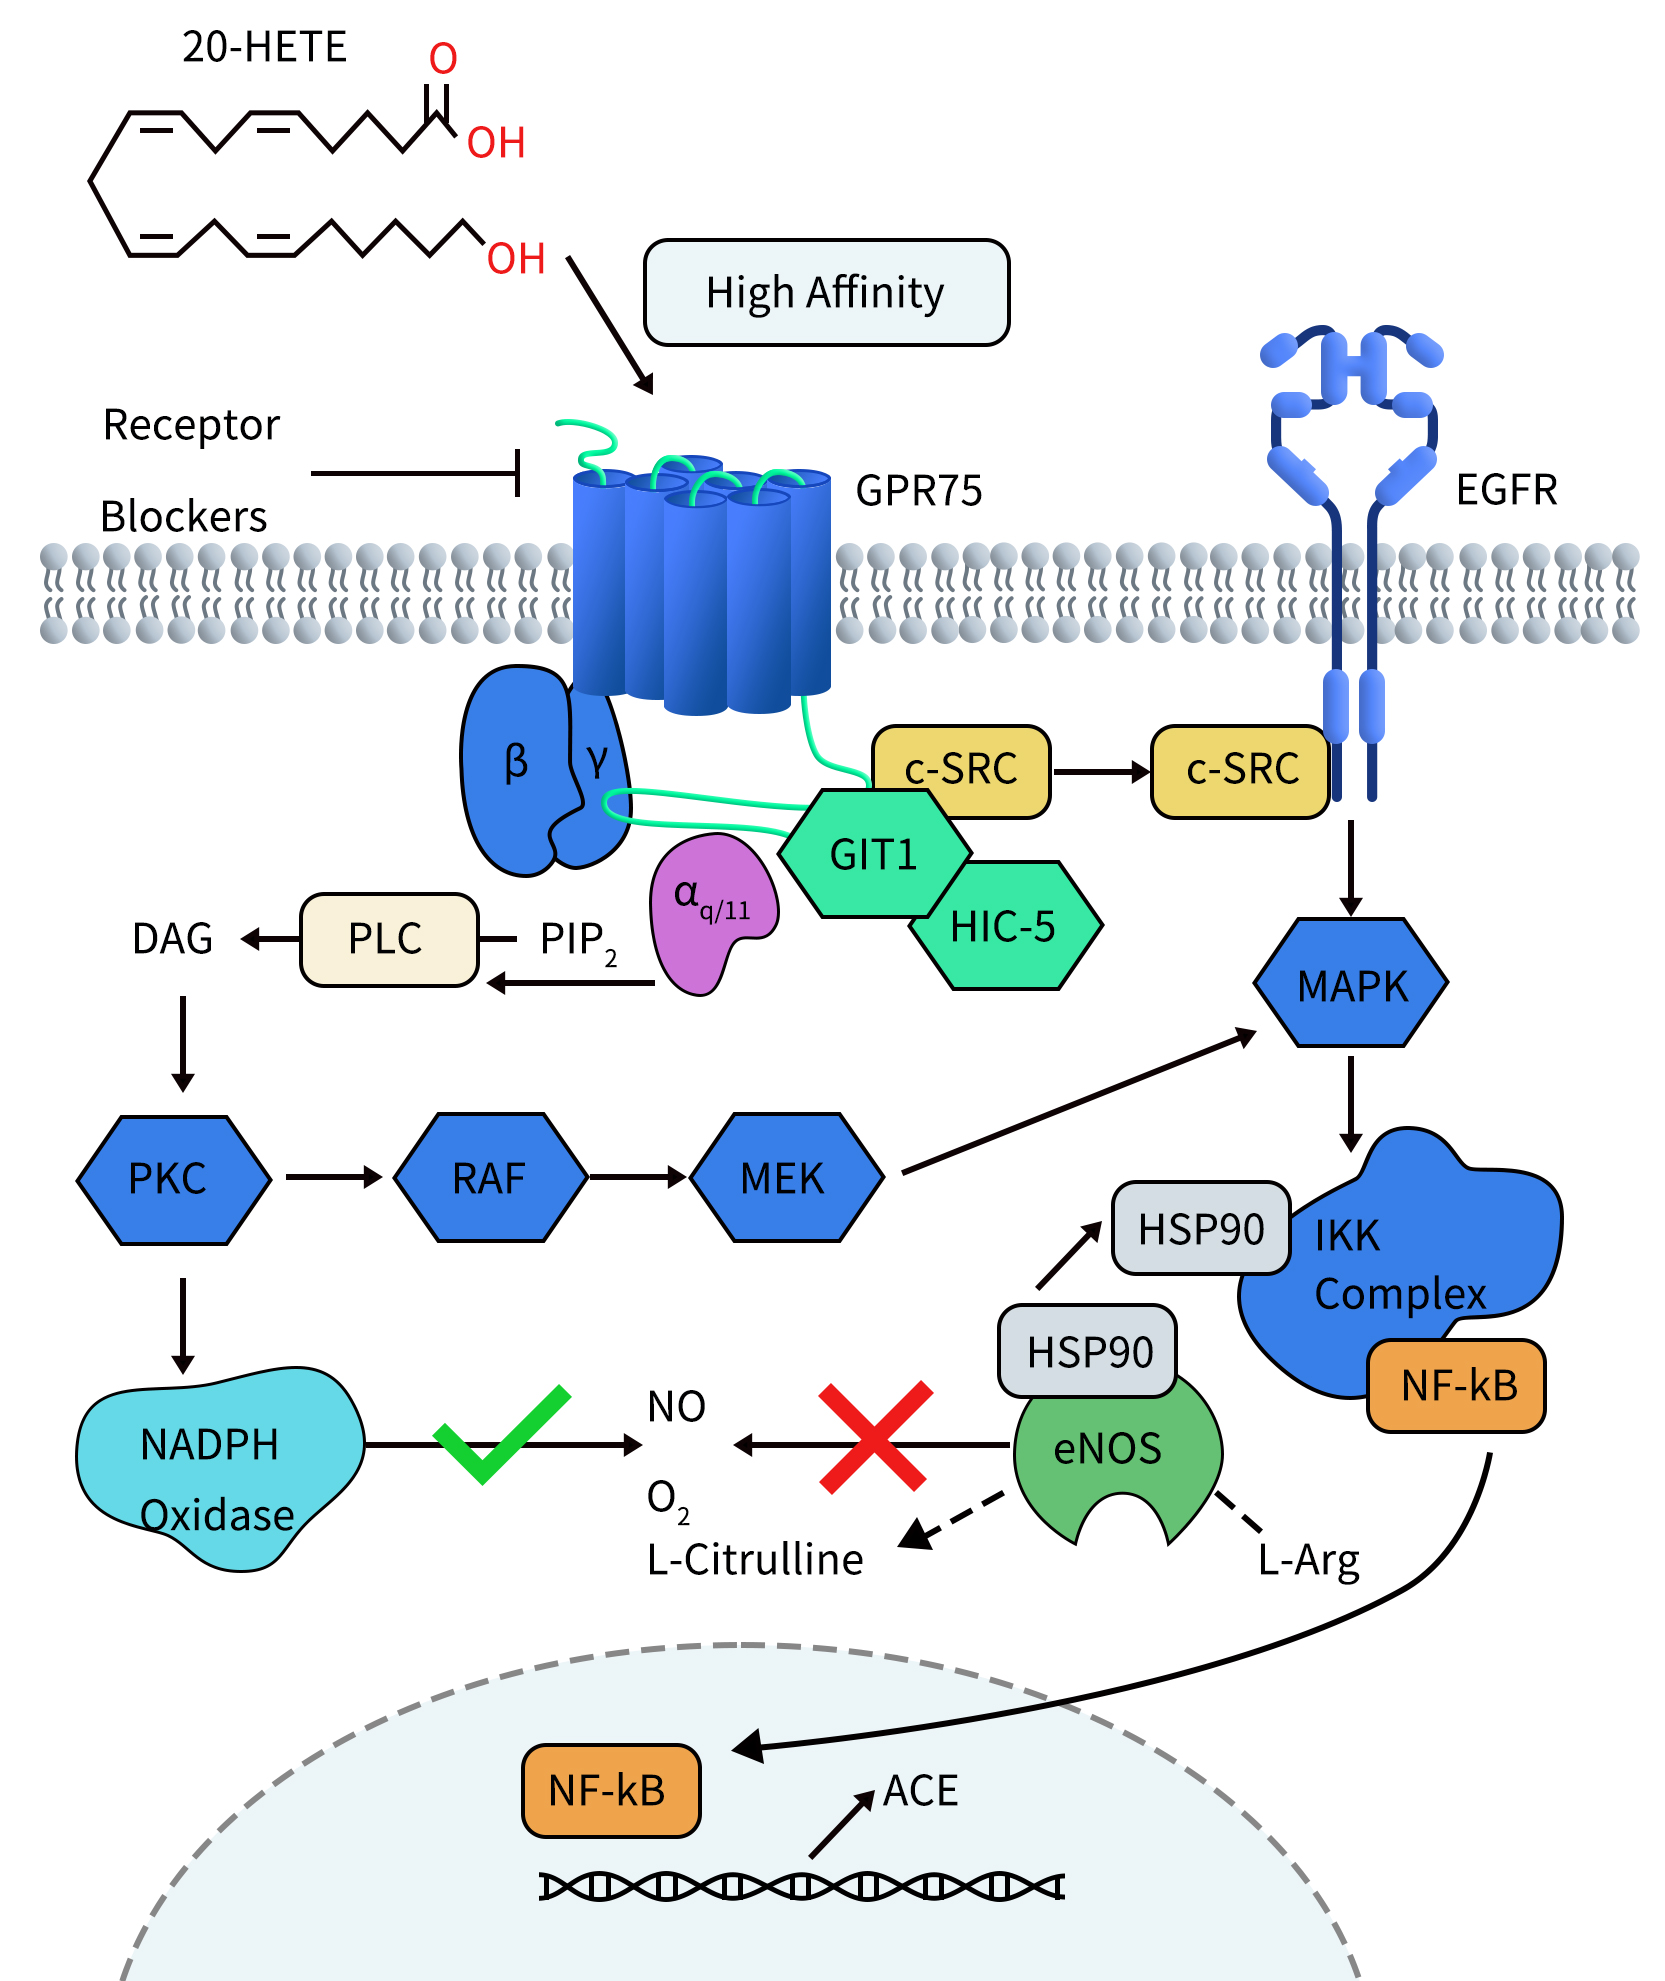 20-HETE Receptor (GPR75) Signaling in Endothelial Cells